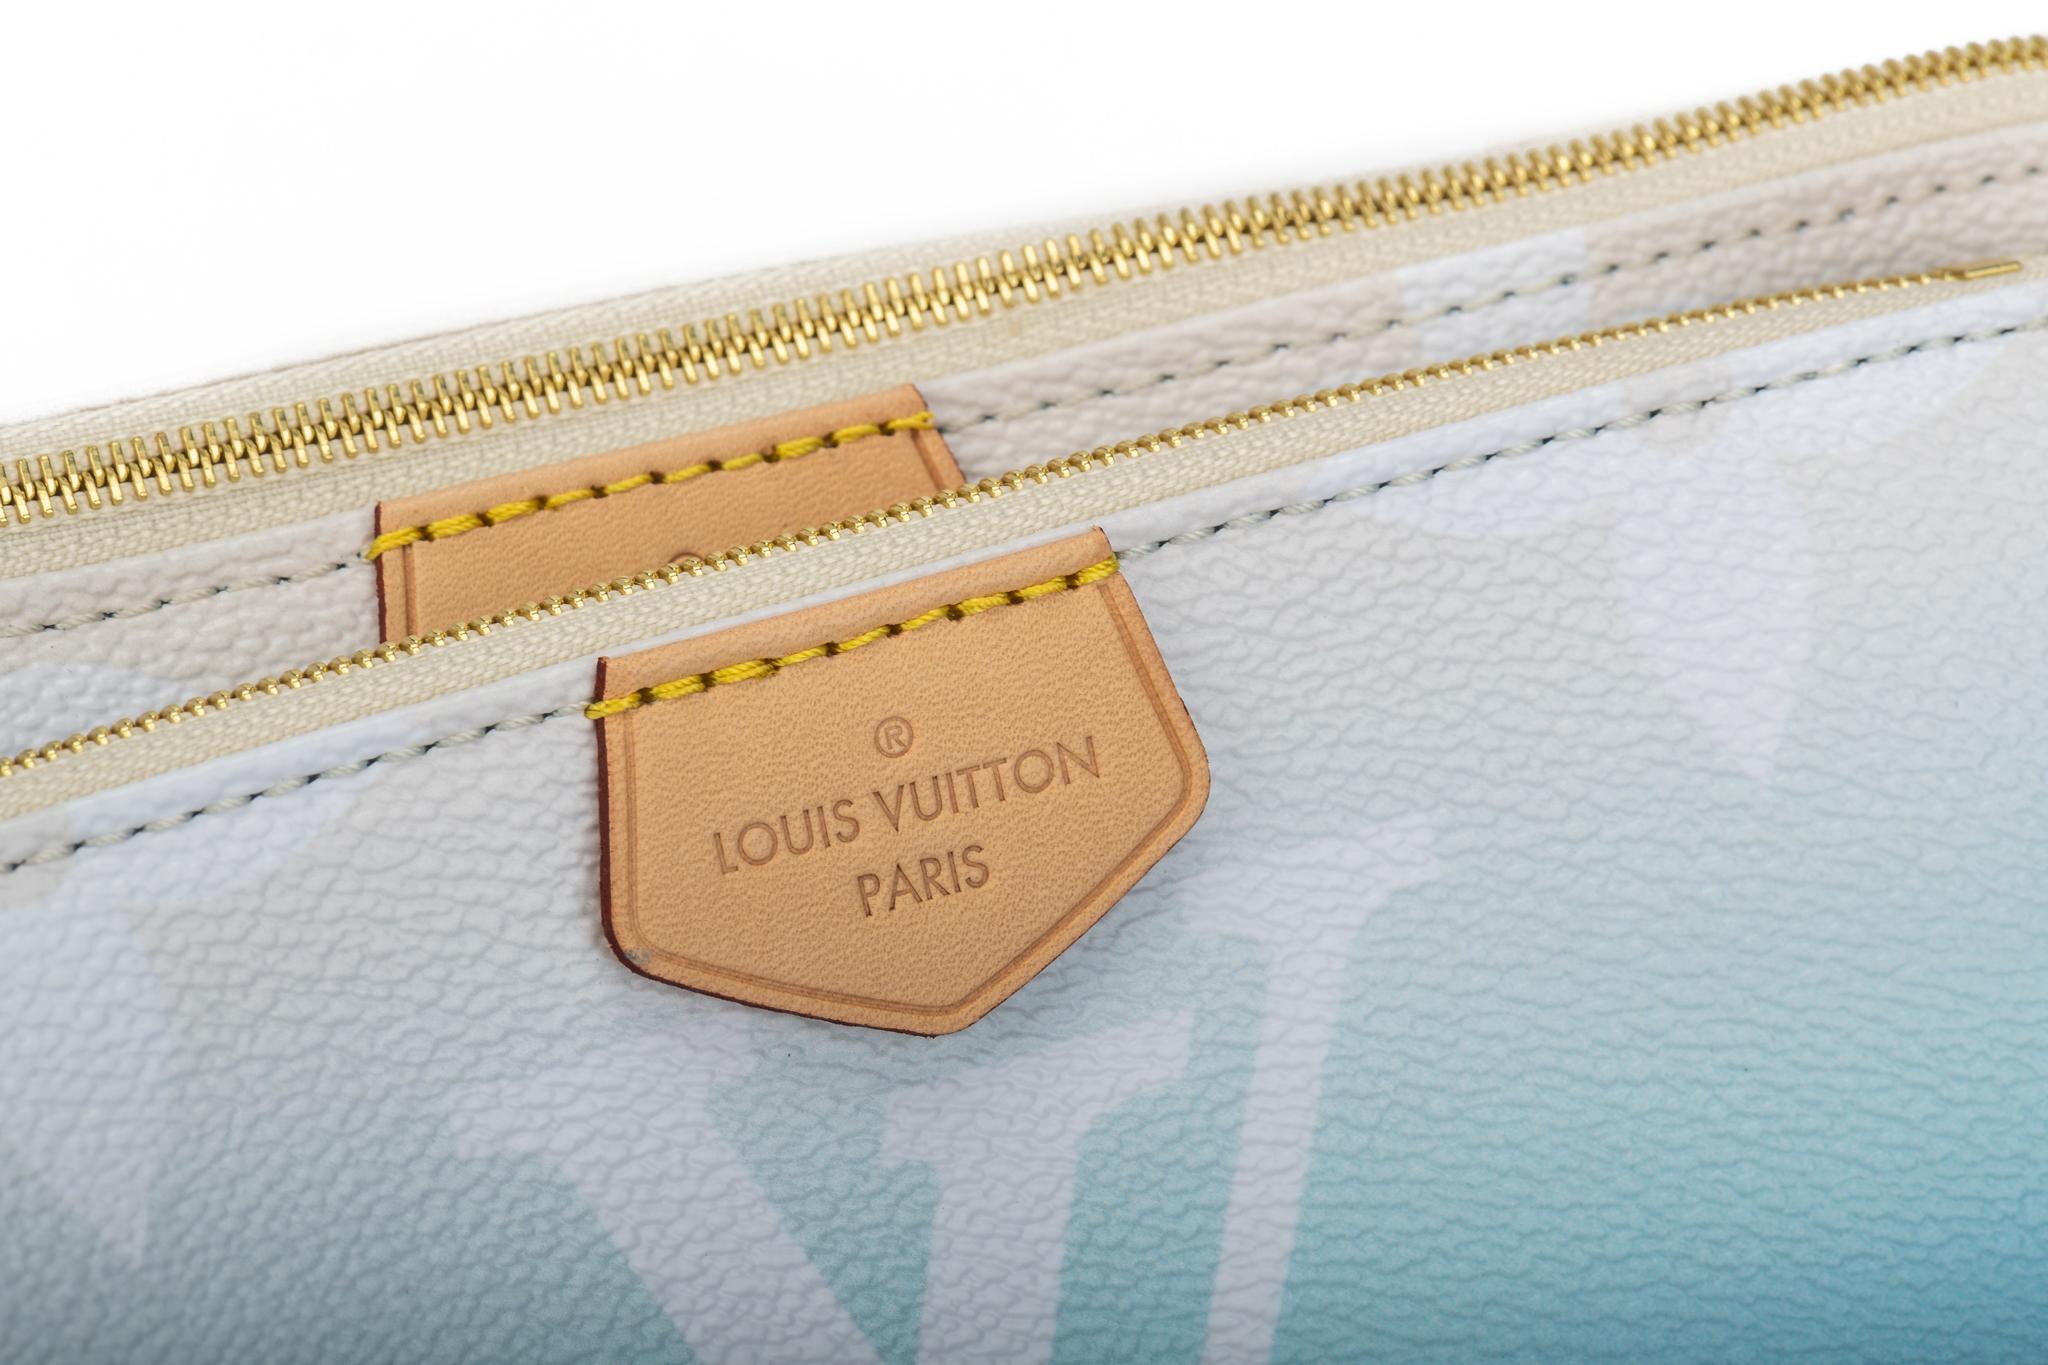 New Louis Vuitton Limited Edition Blue Multi Pochette Bag in Box 7